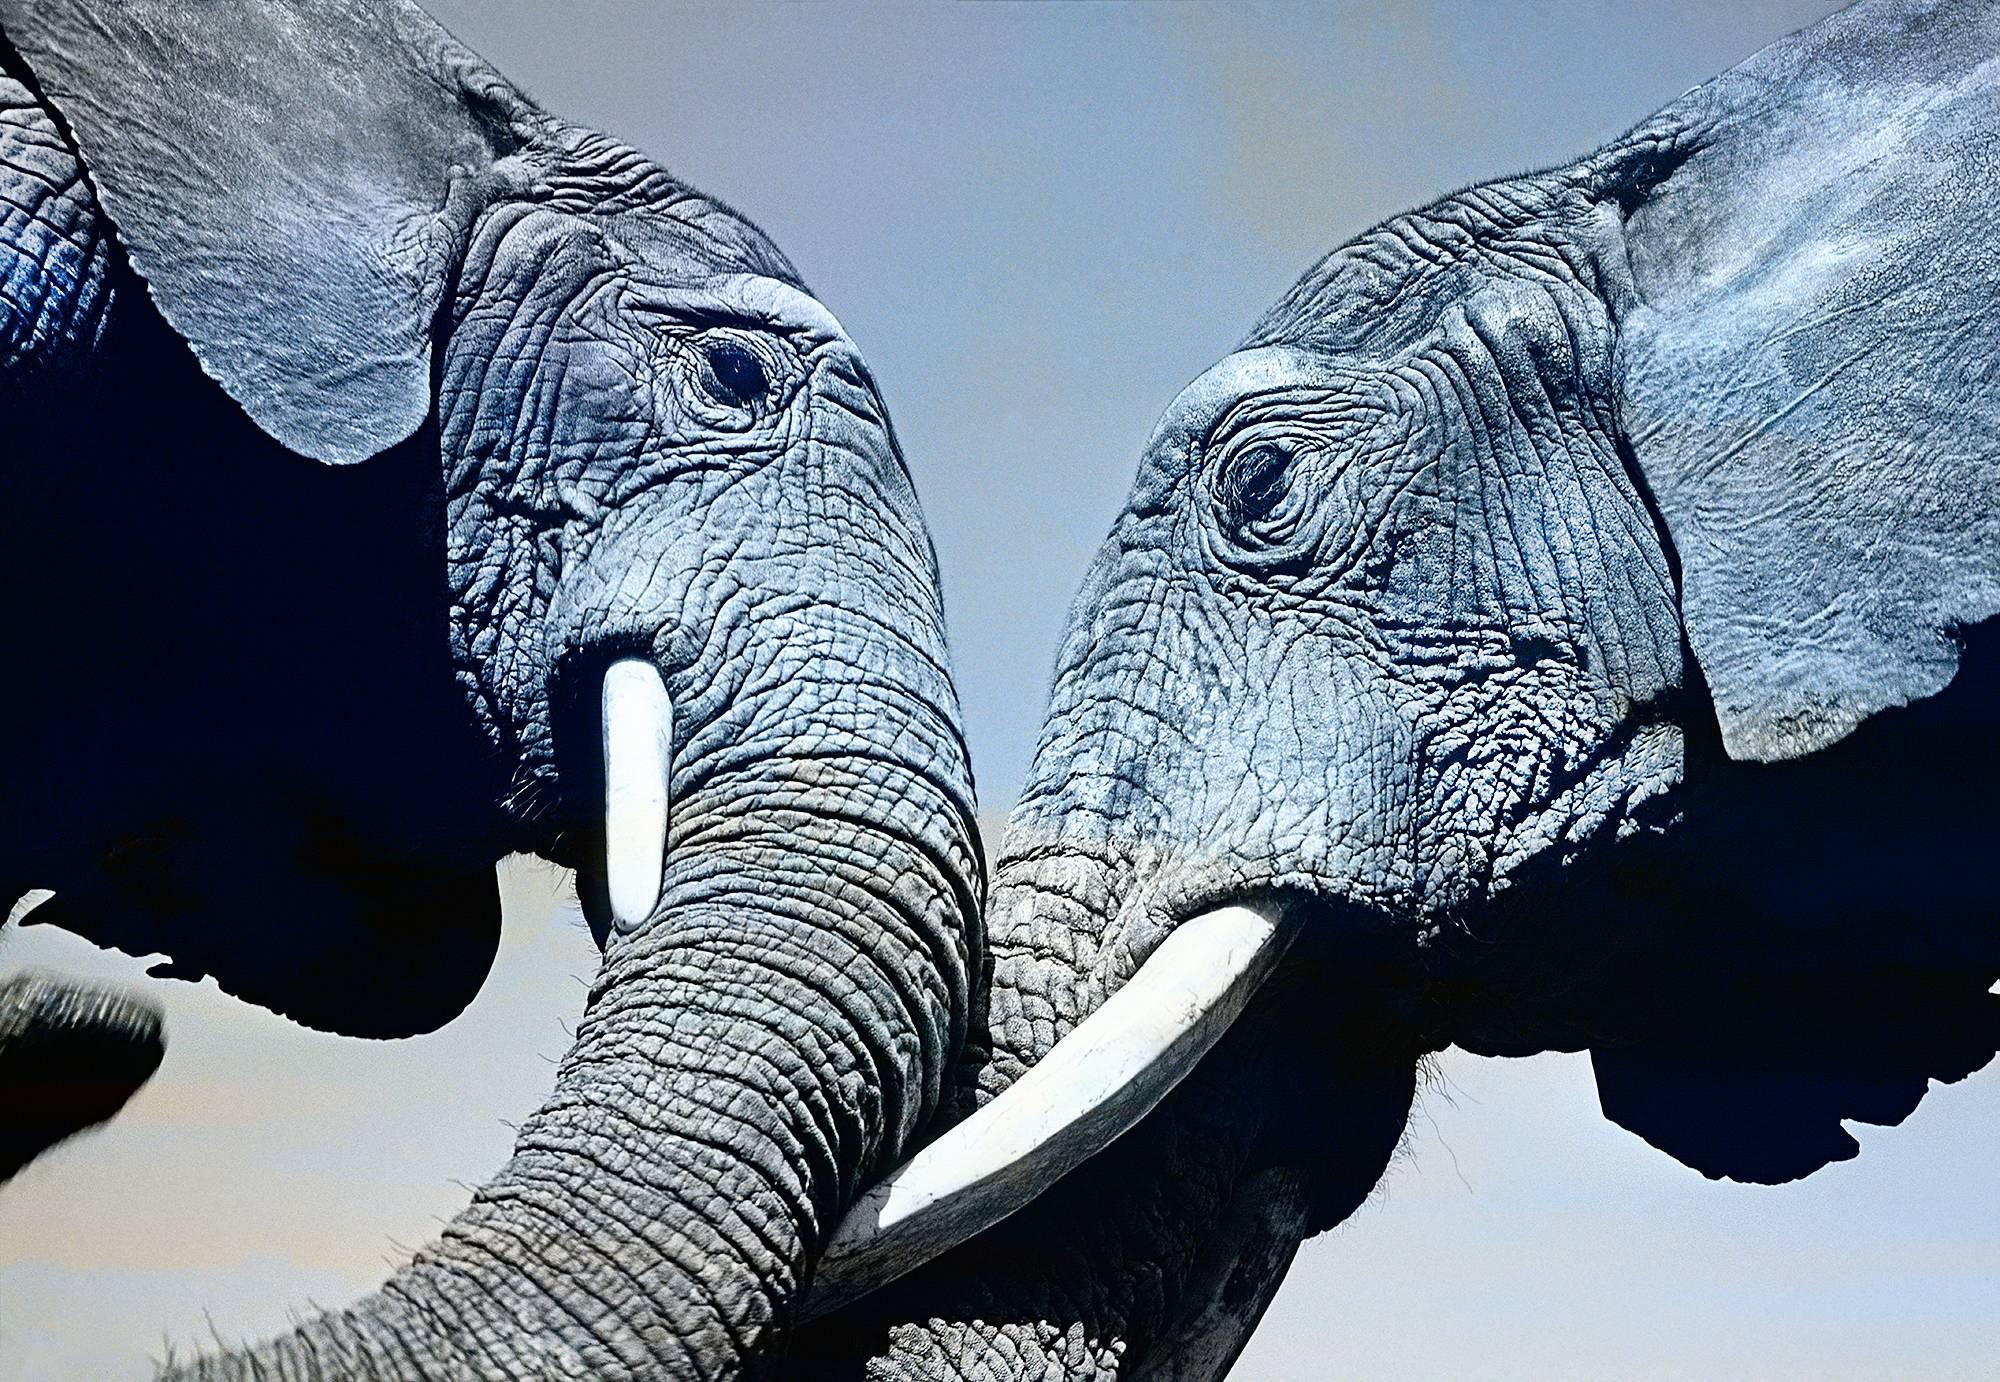 Mitchell Funk Figurative Photograph - Elephants in Mexico, Life Magazine